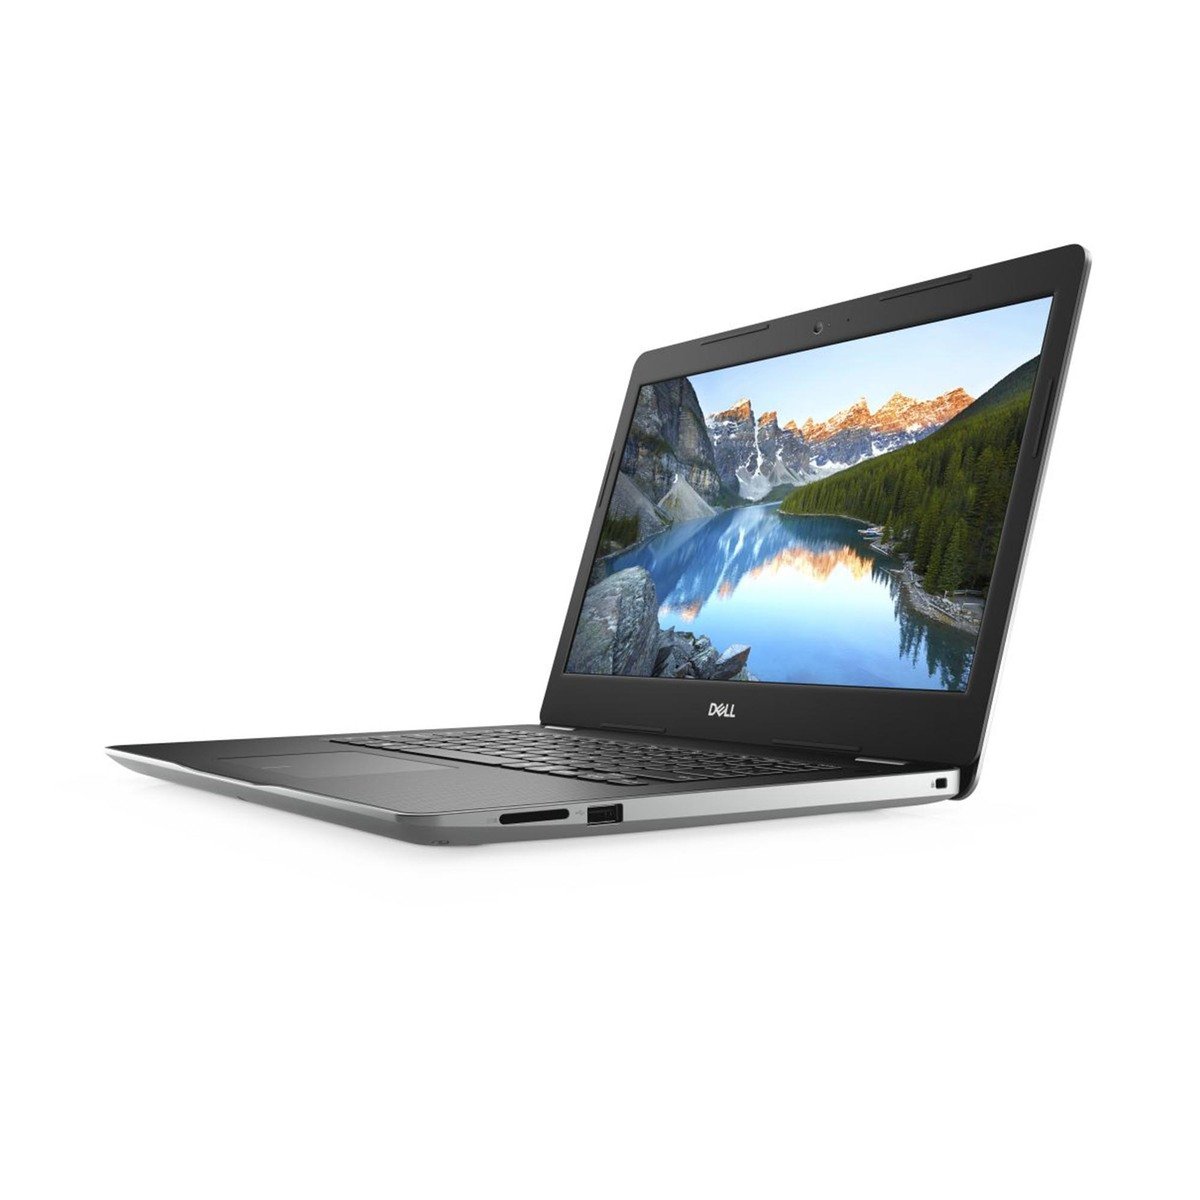 Dell Notebook 3482-INS-3102, Intel Celeron N4000, 4GB RAM, 64GB SSD, Intel HD Graphics, 14"HD LED Display, Windows 10, Silver